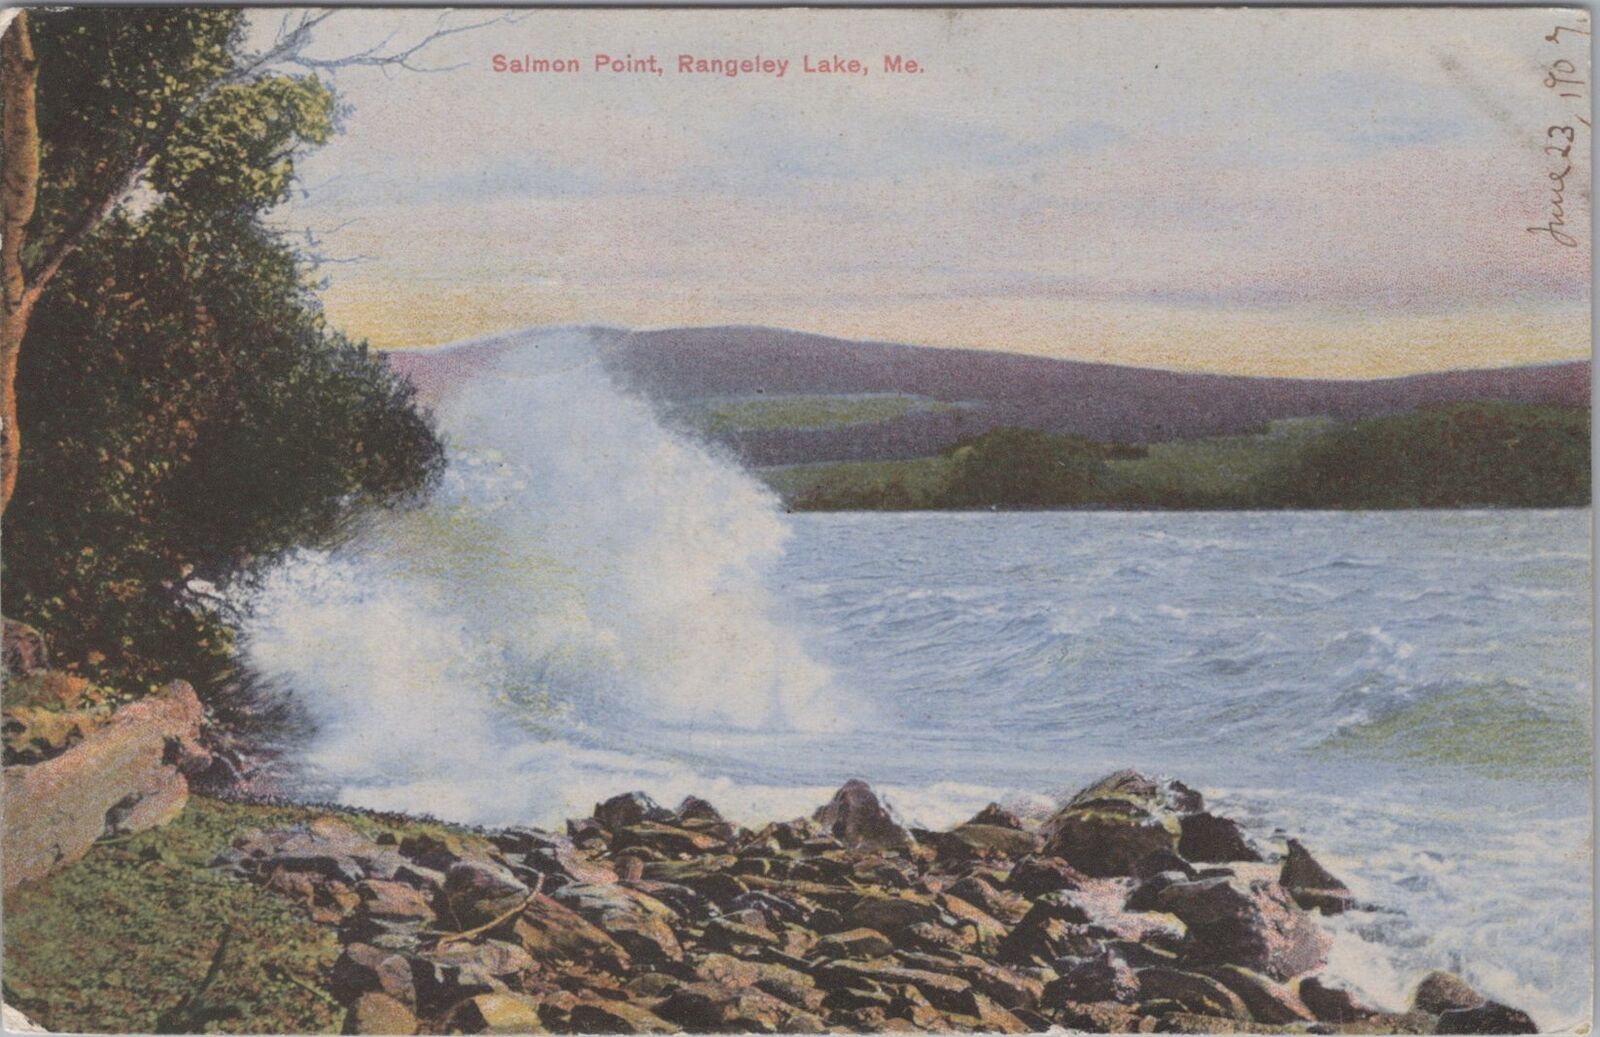 Salmon Point, Rangeley Lake, Maine 1917 Postcard